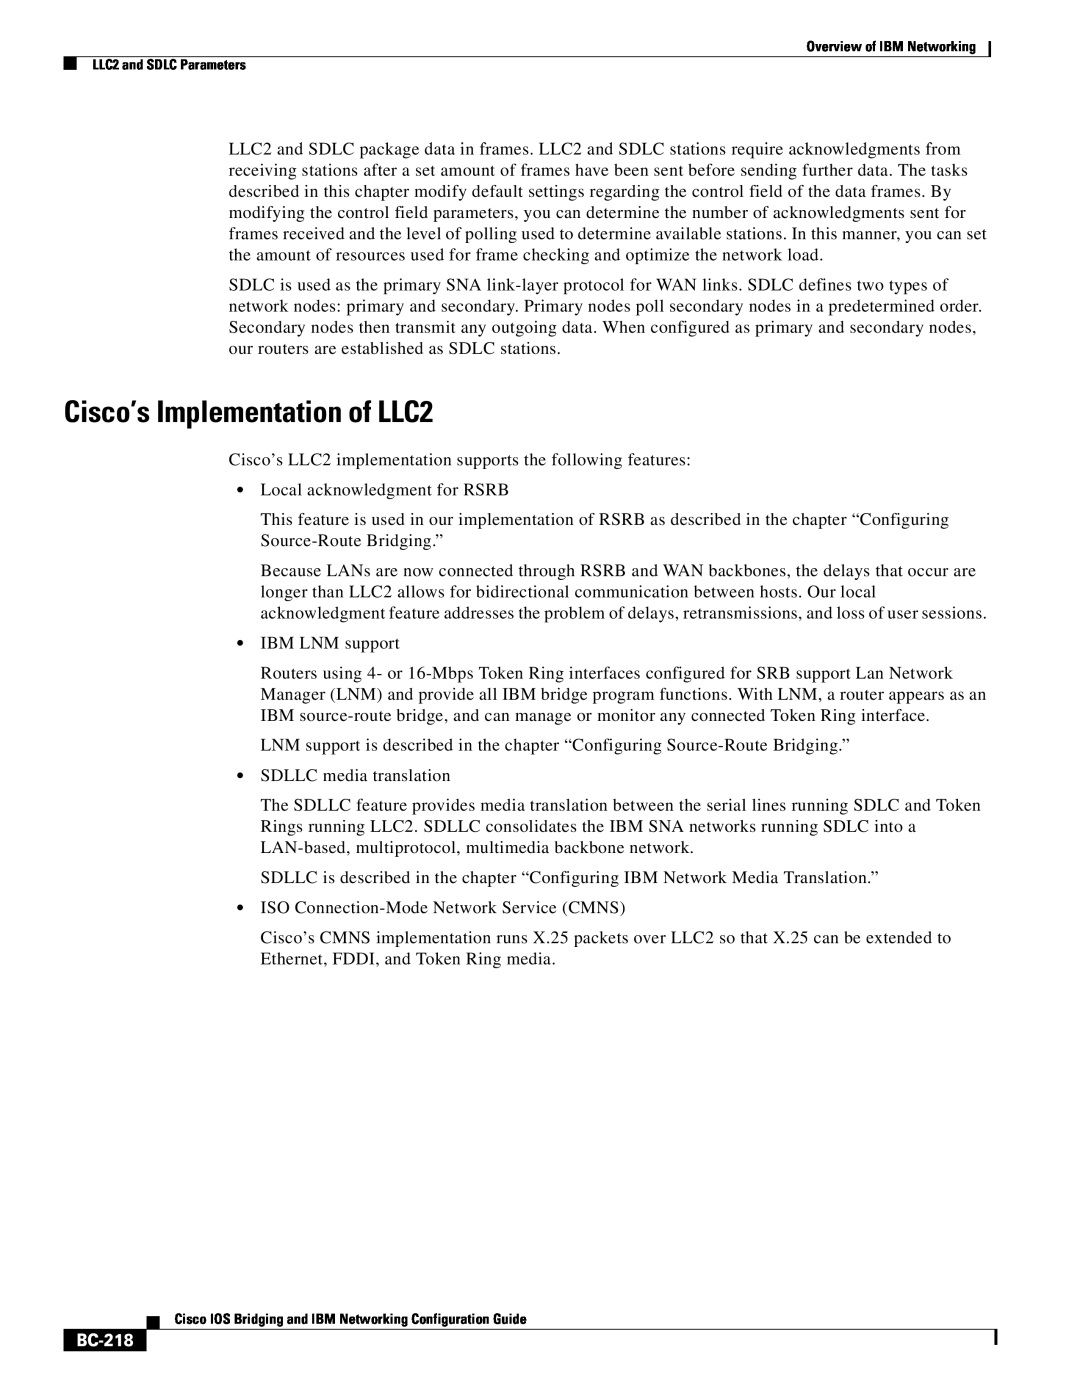 IBM BC-203 manual Cisco’s Implementation of LLC2, BC-218 